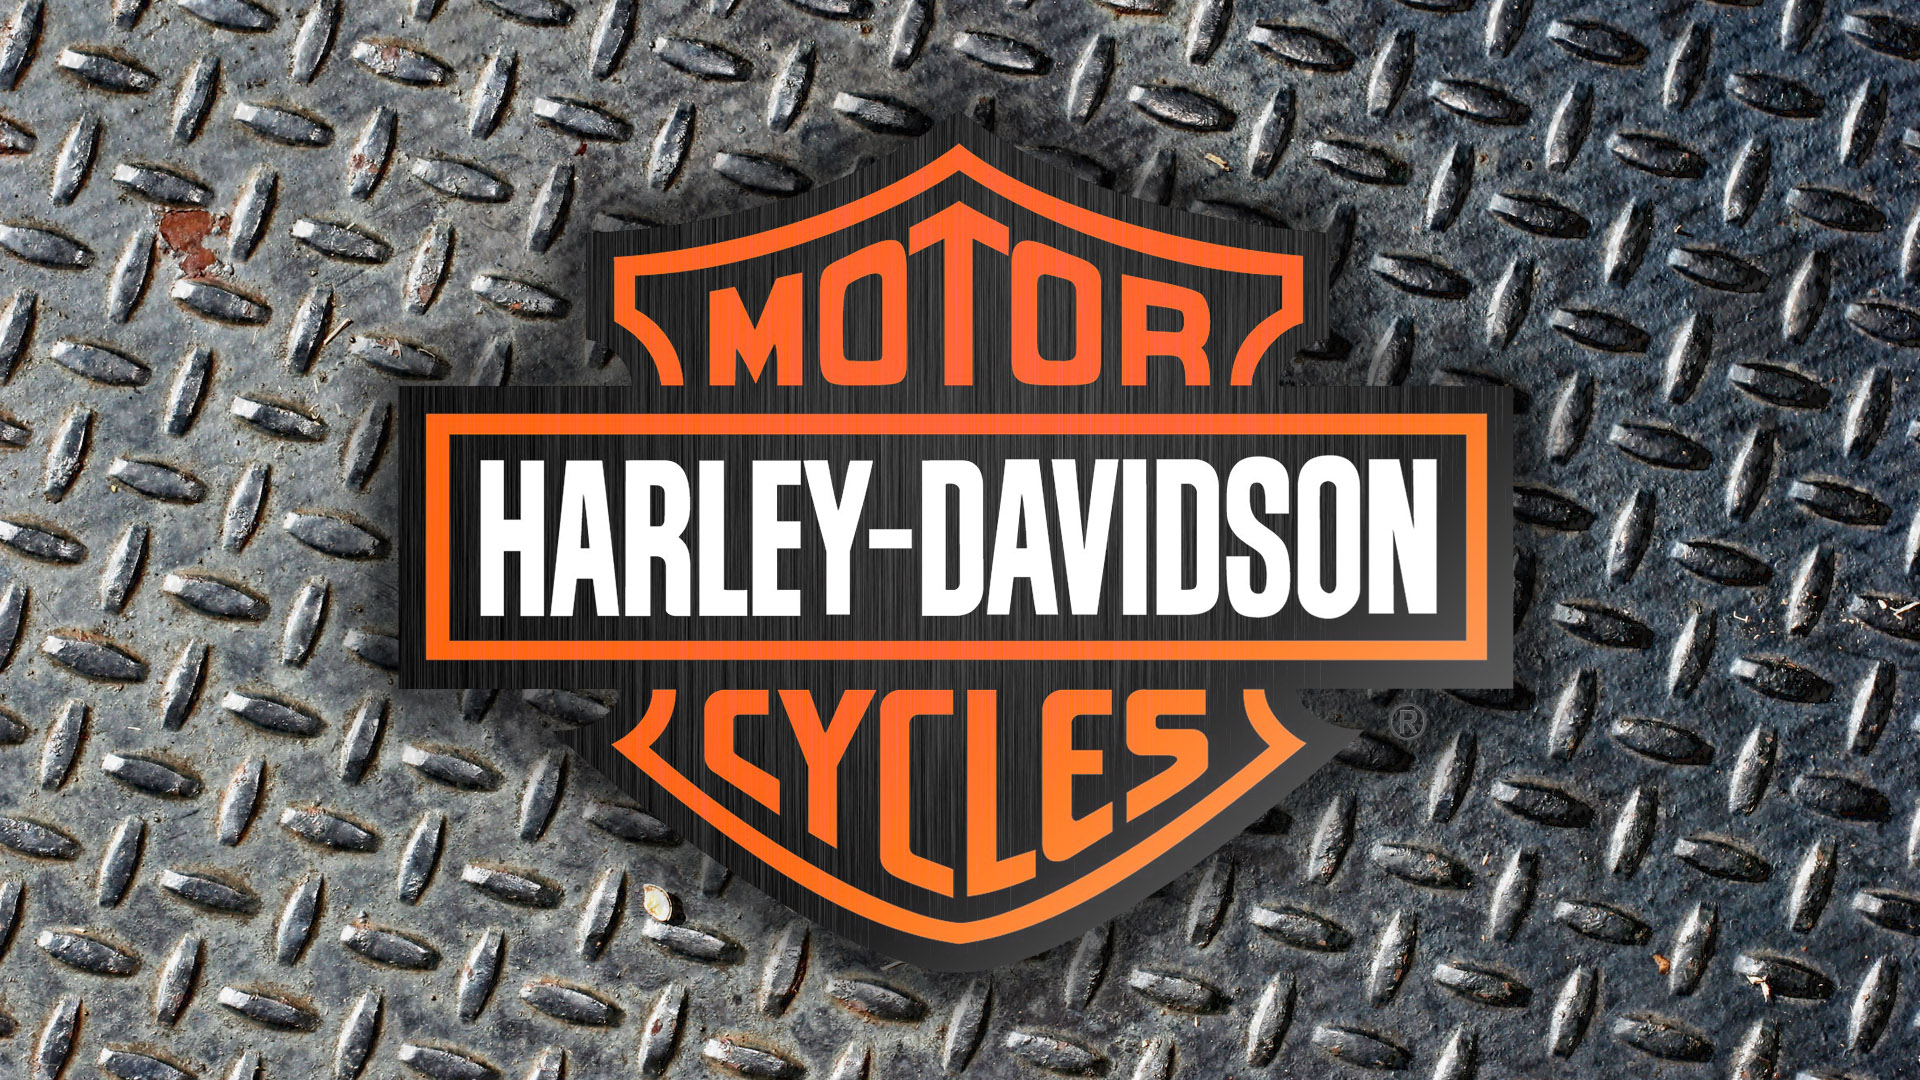 Harley Davidson Motor Cycles Jpg